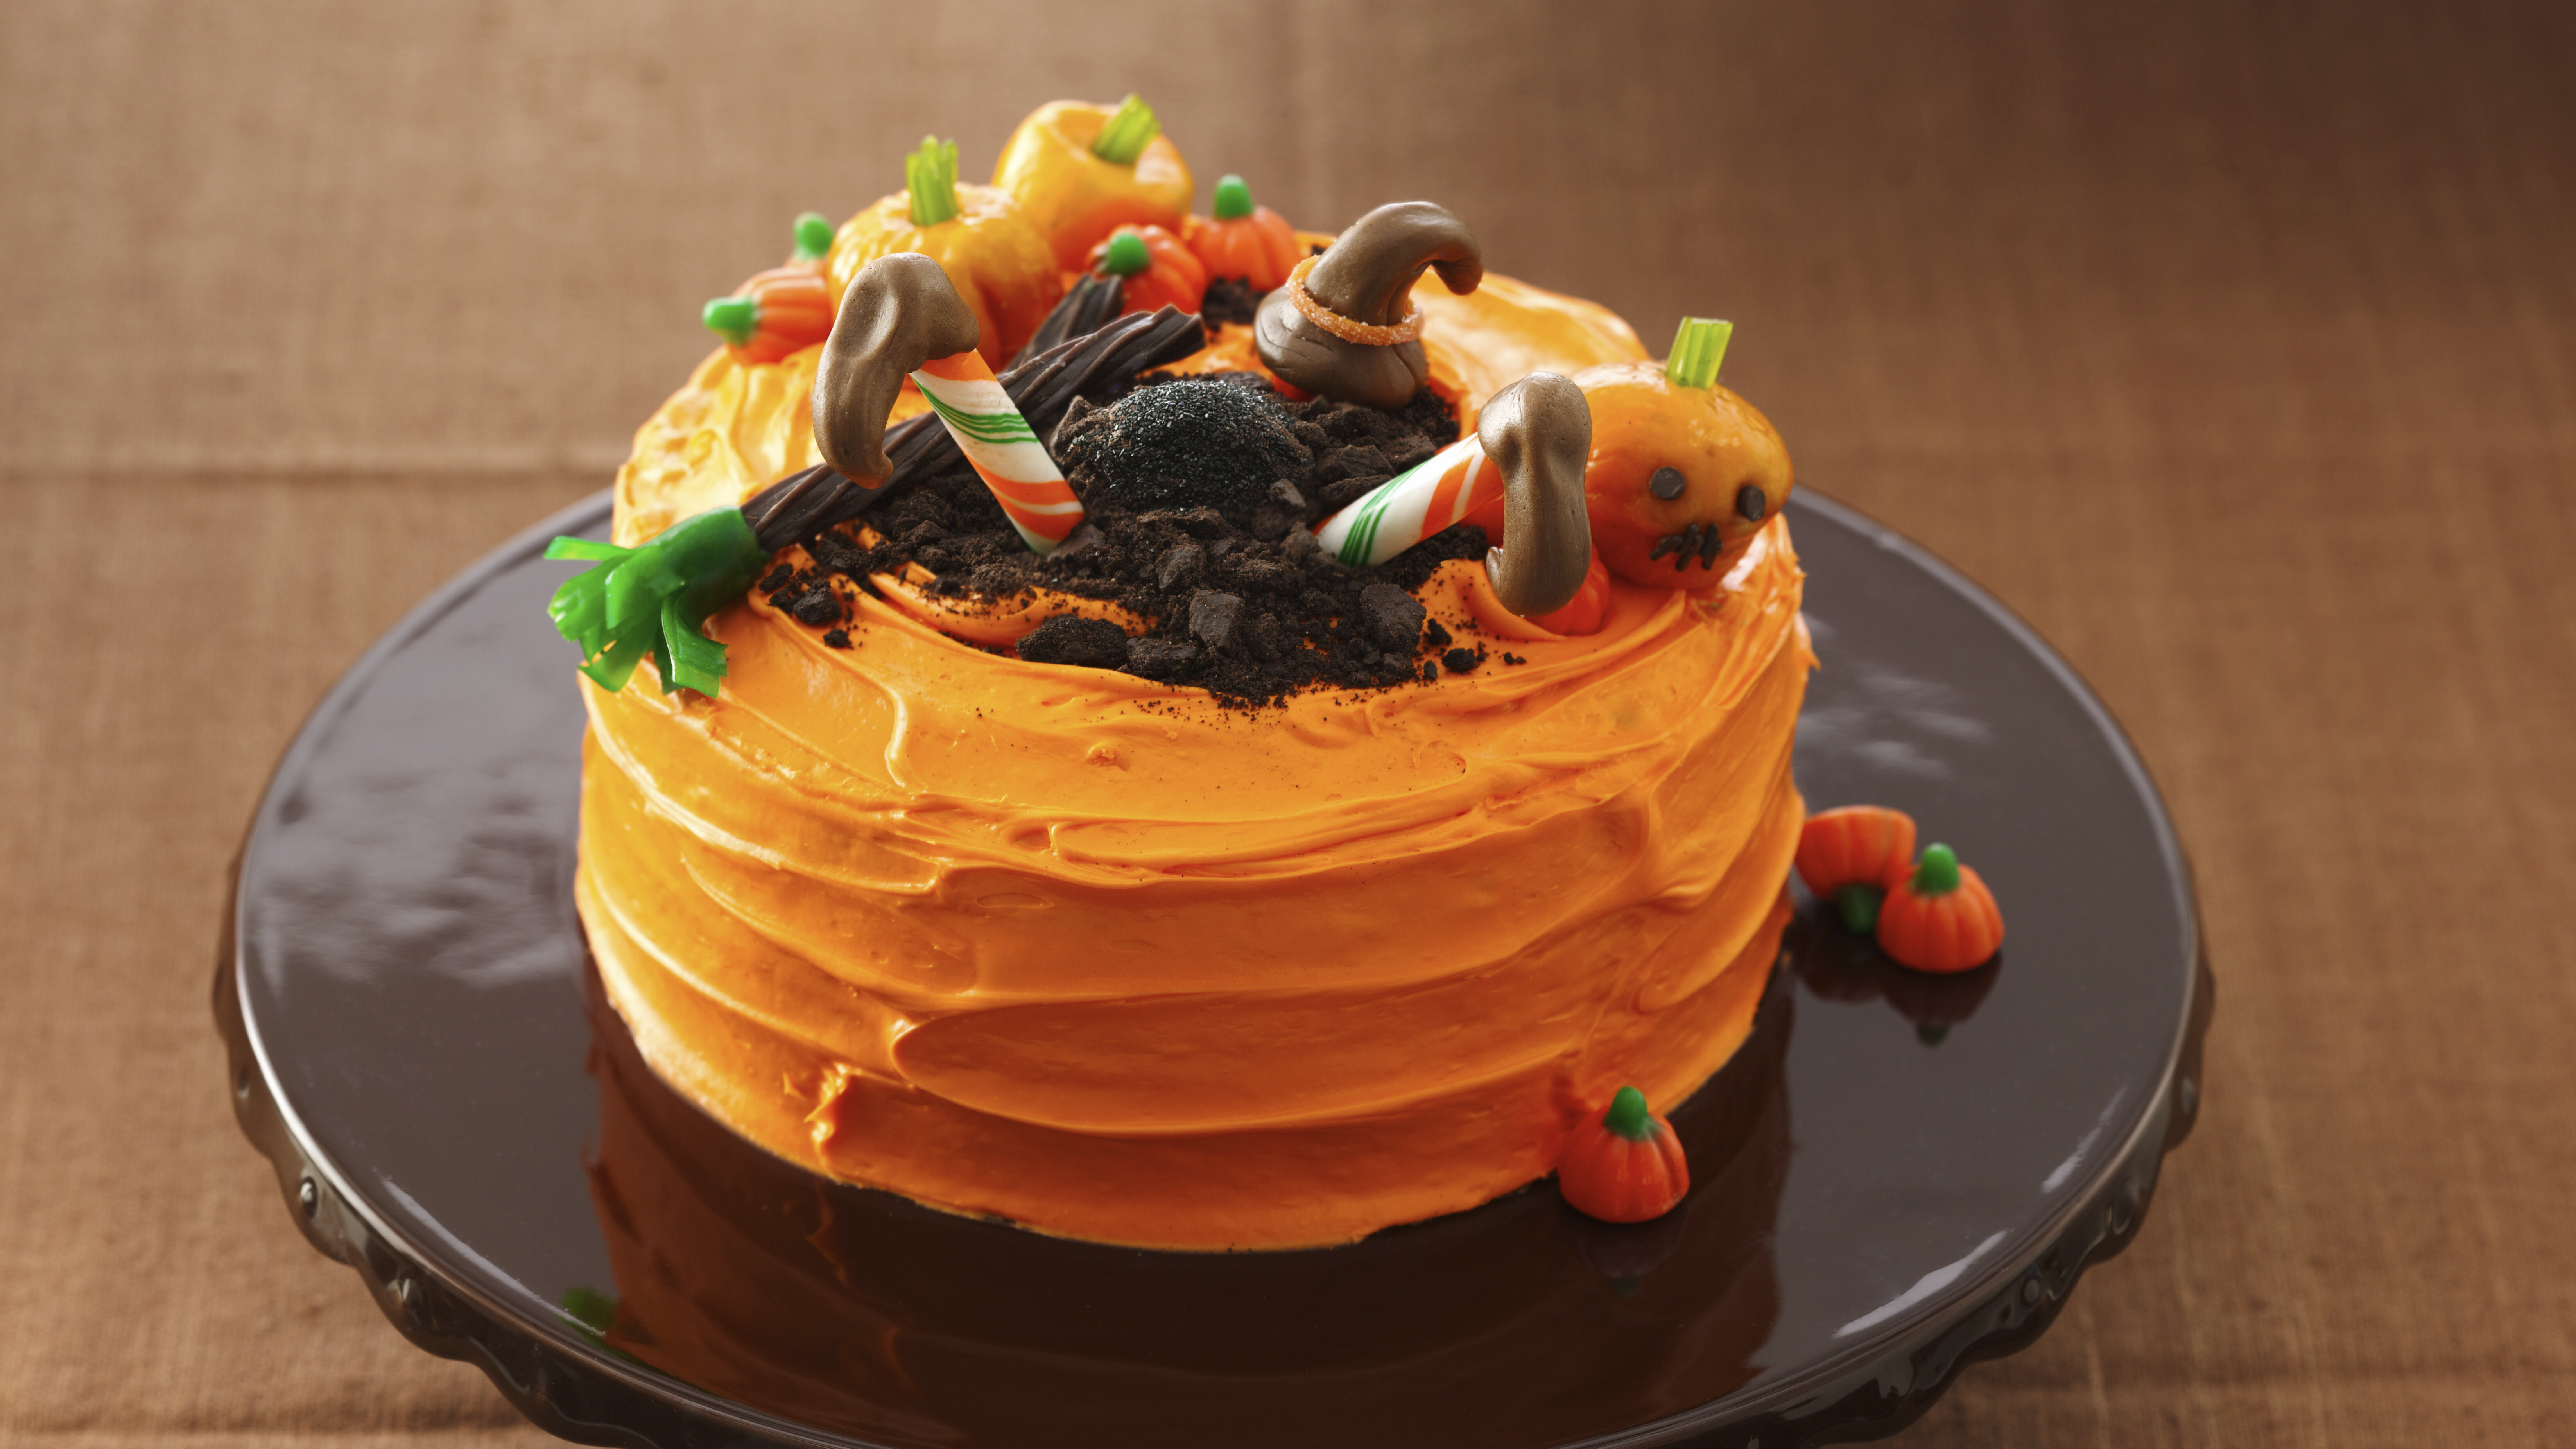 10 Easy Halloween Cake Decorating Ideas - YouTube